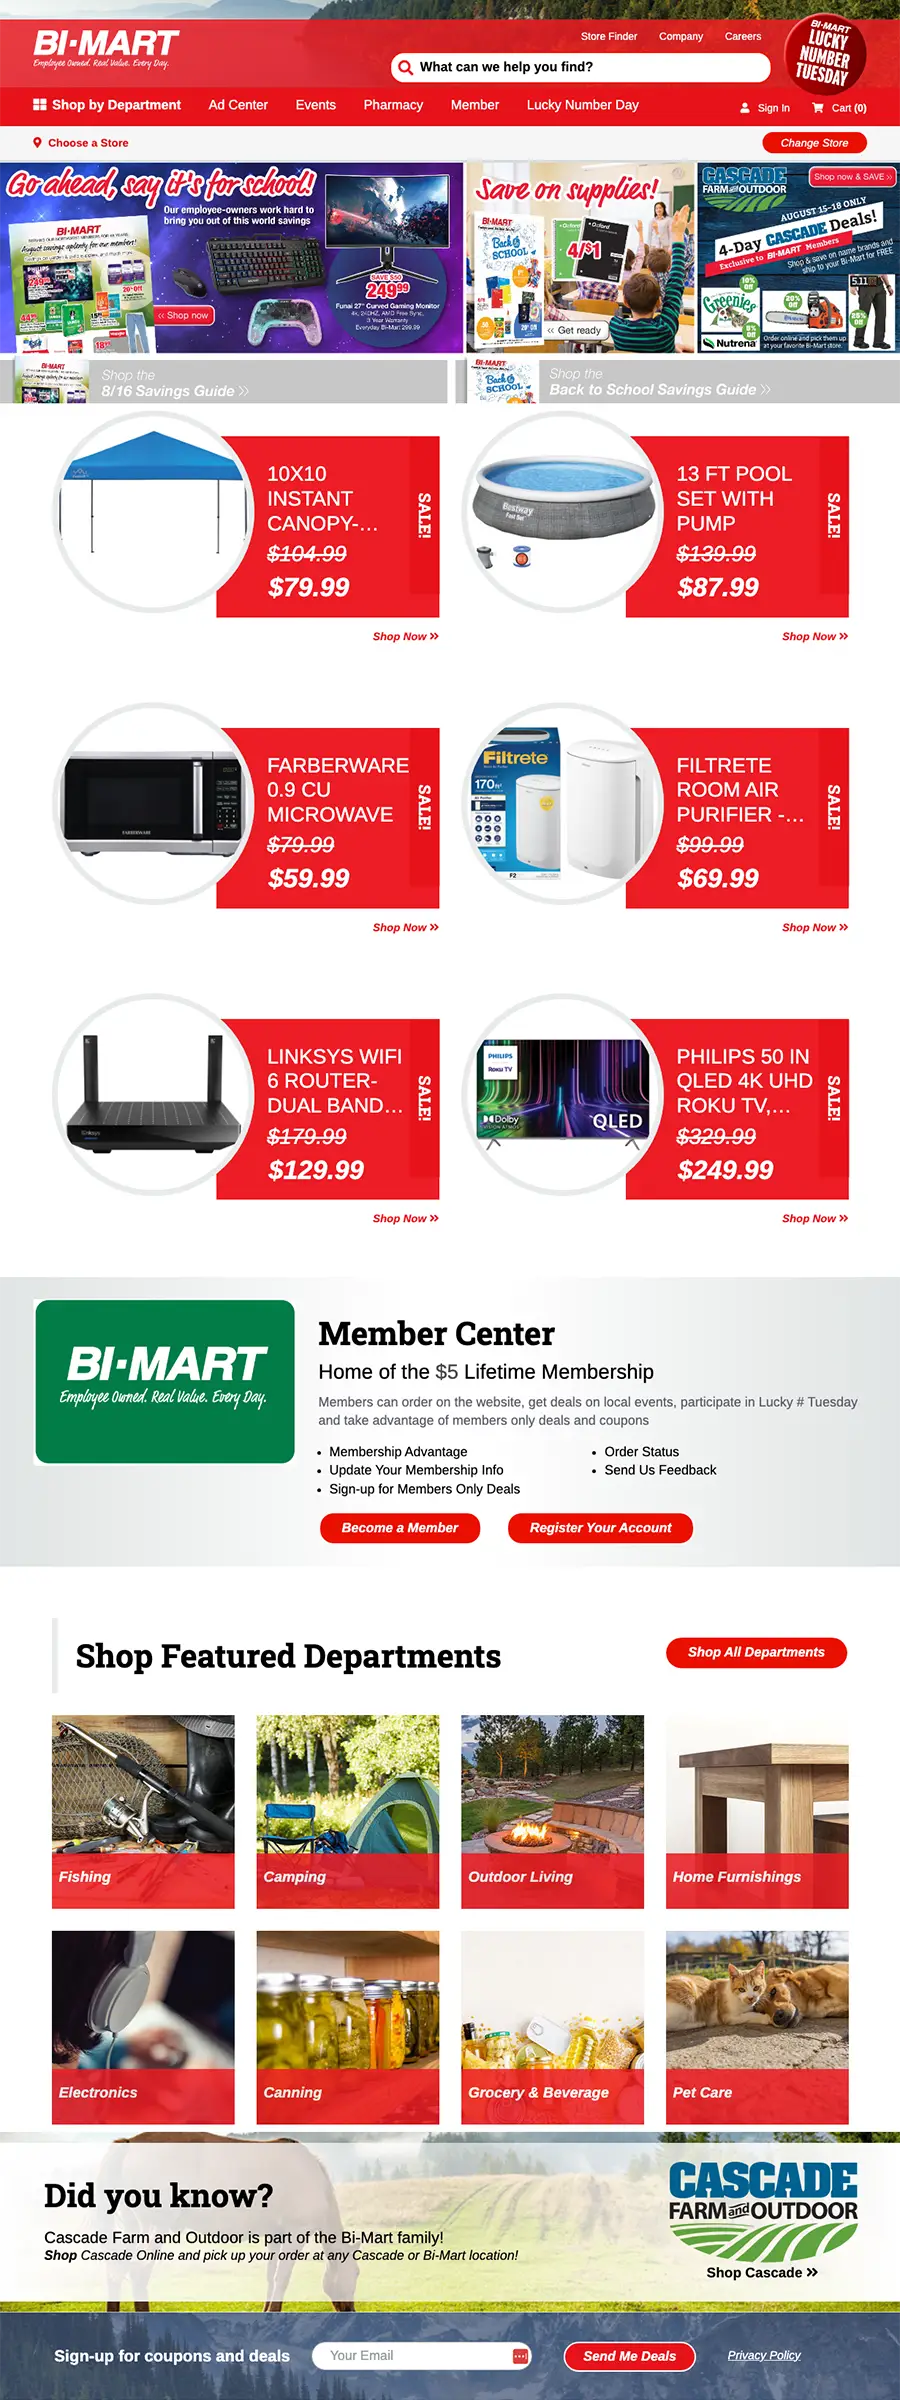 Homepage of bimart.com